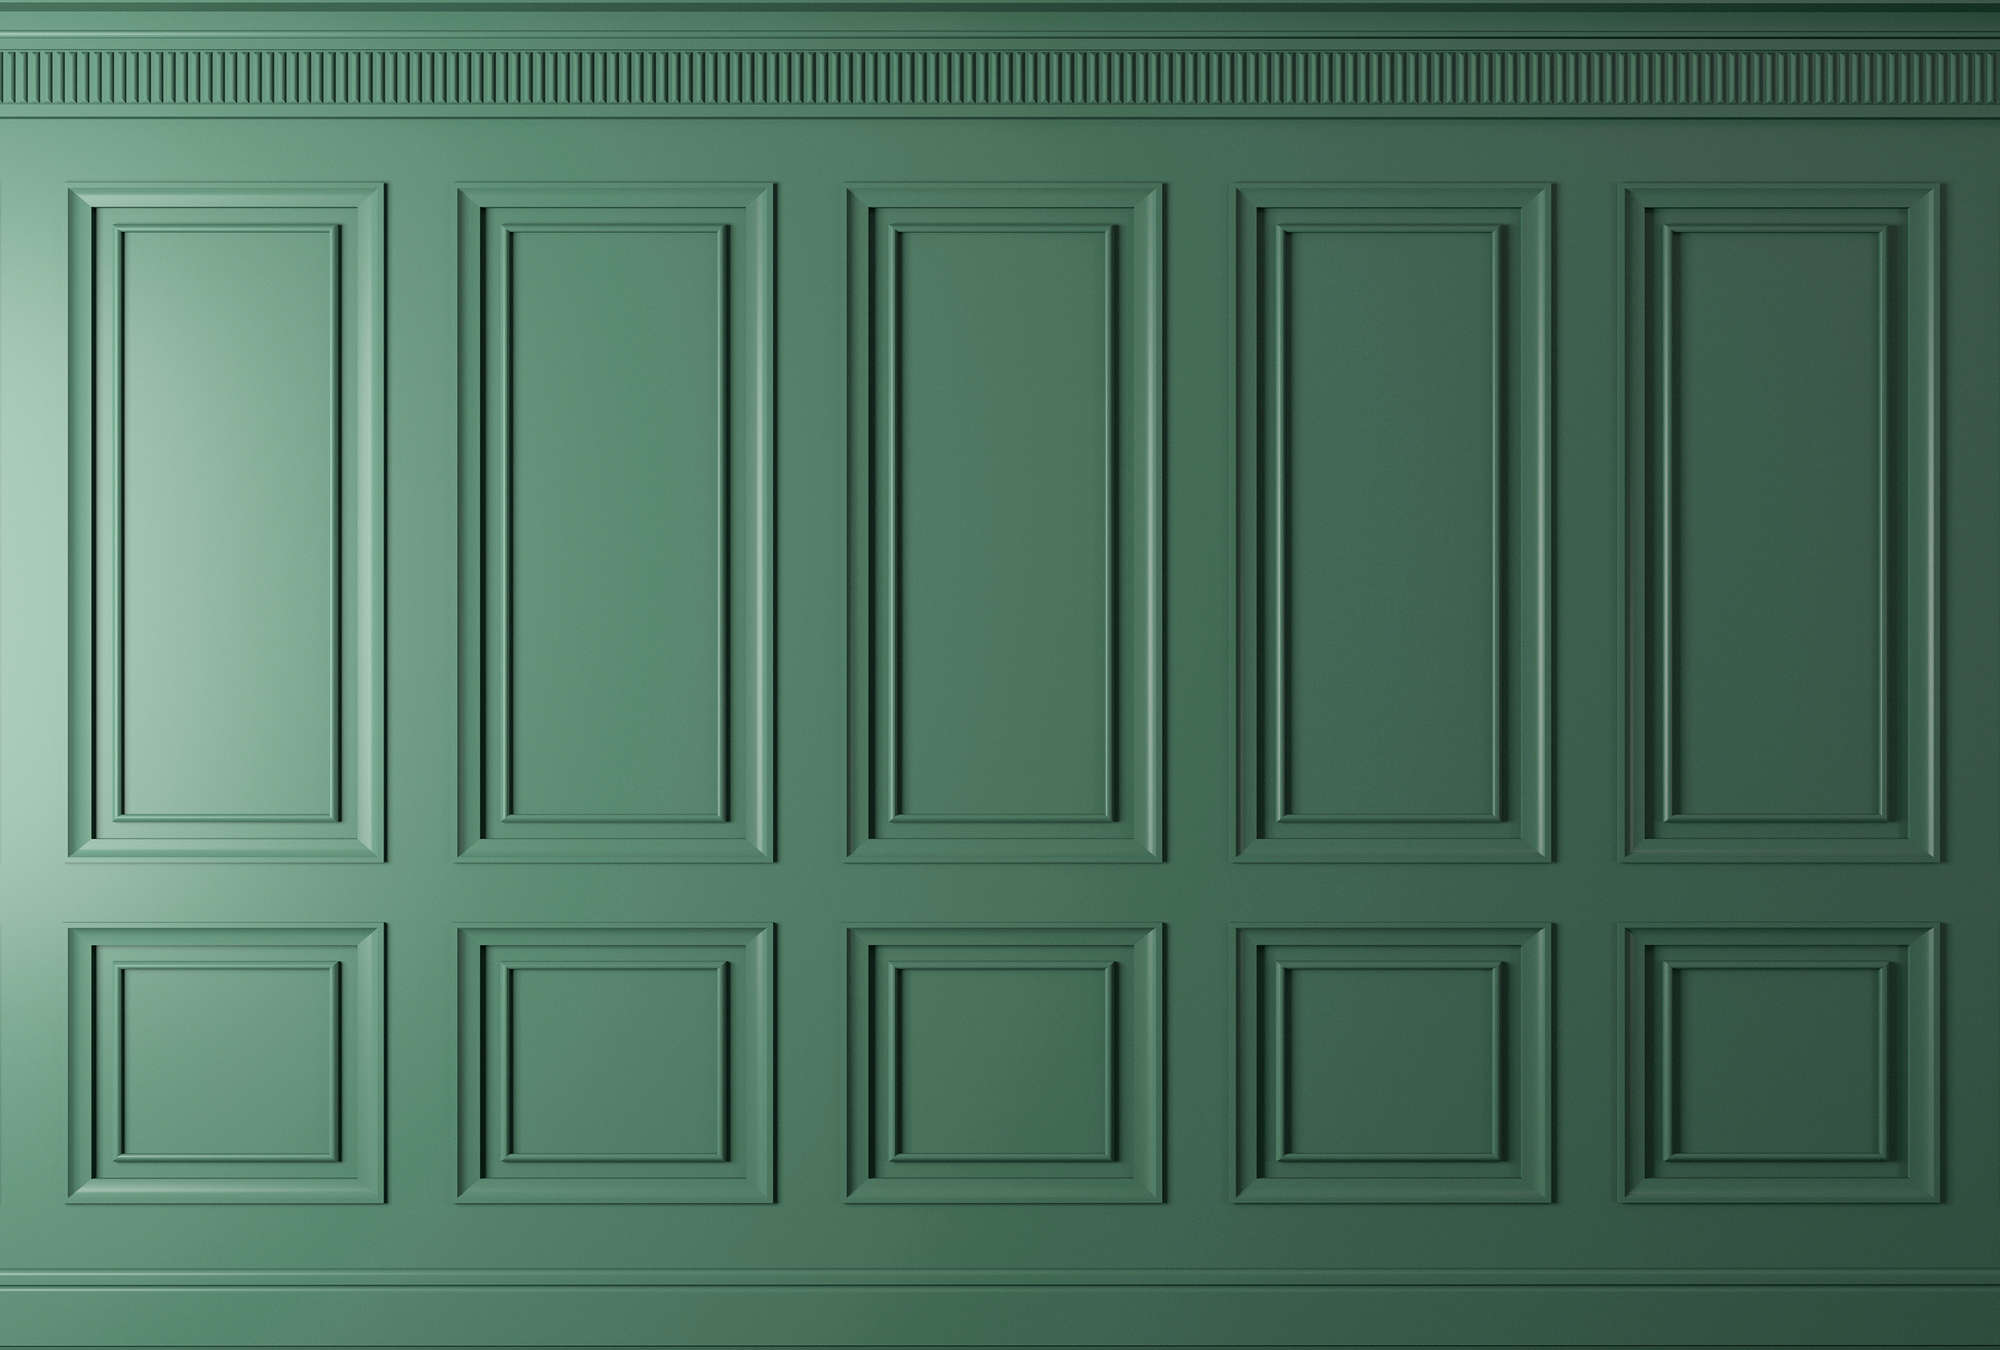             Kensington 1 - Papel pintado 3D revestimiento de madera verde abeto
        